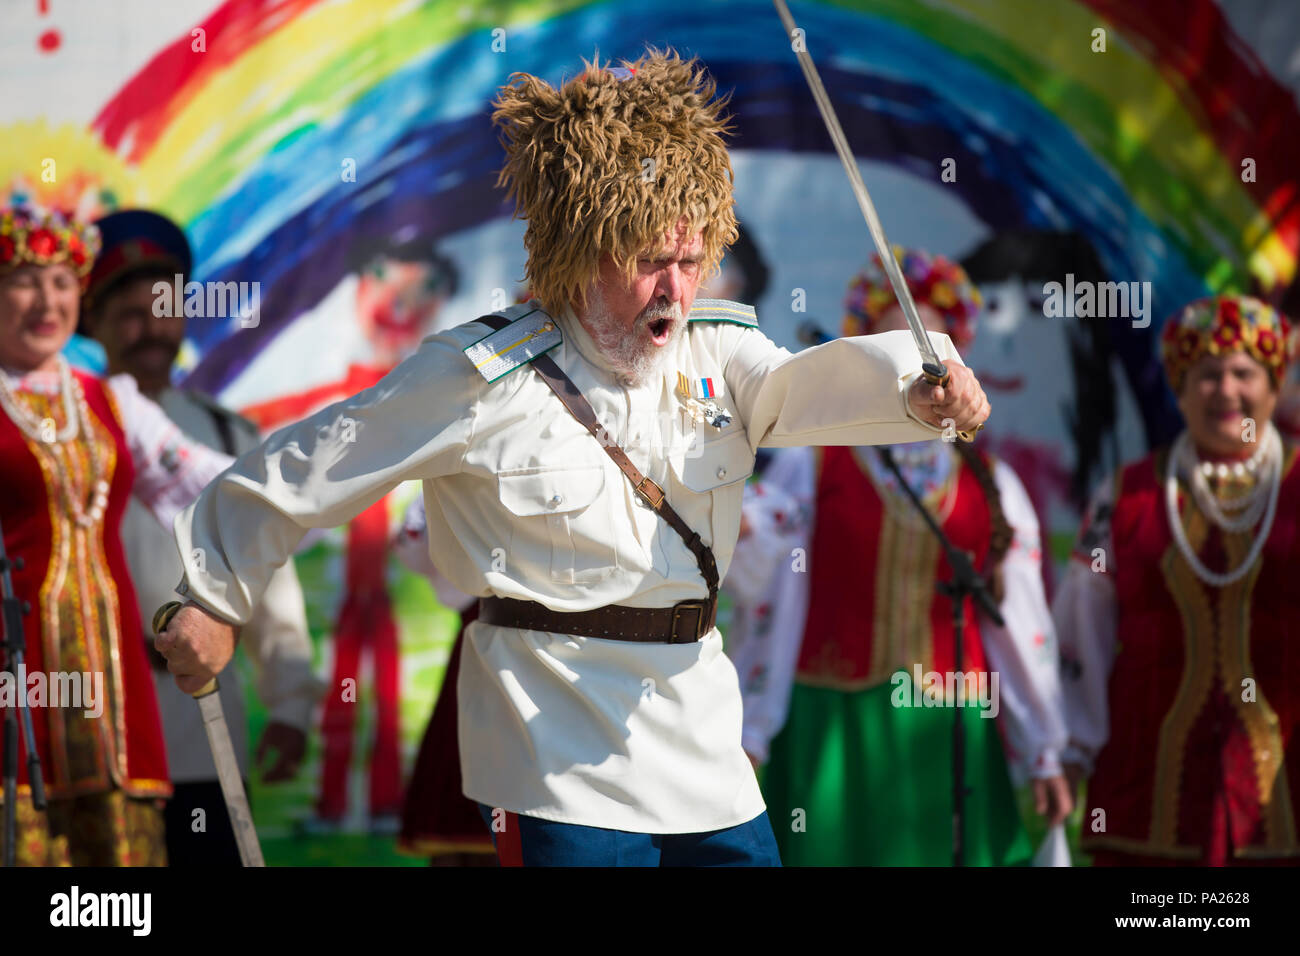 Russian man waving sword in performance Stock Photo